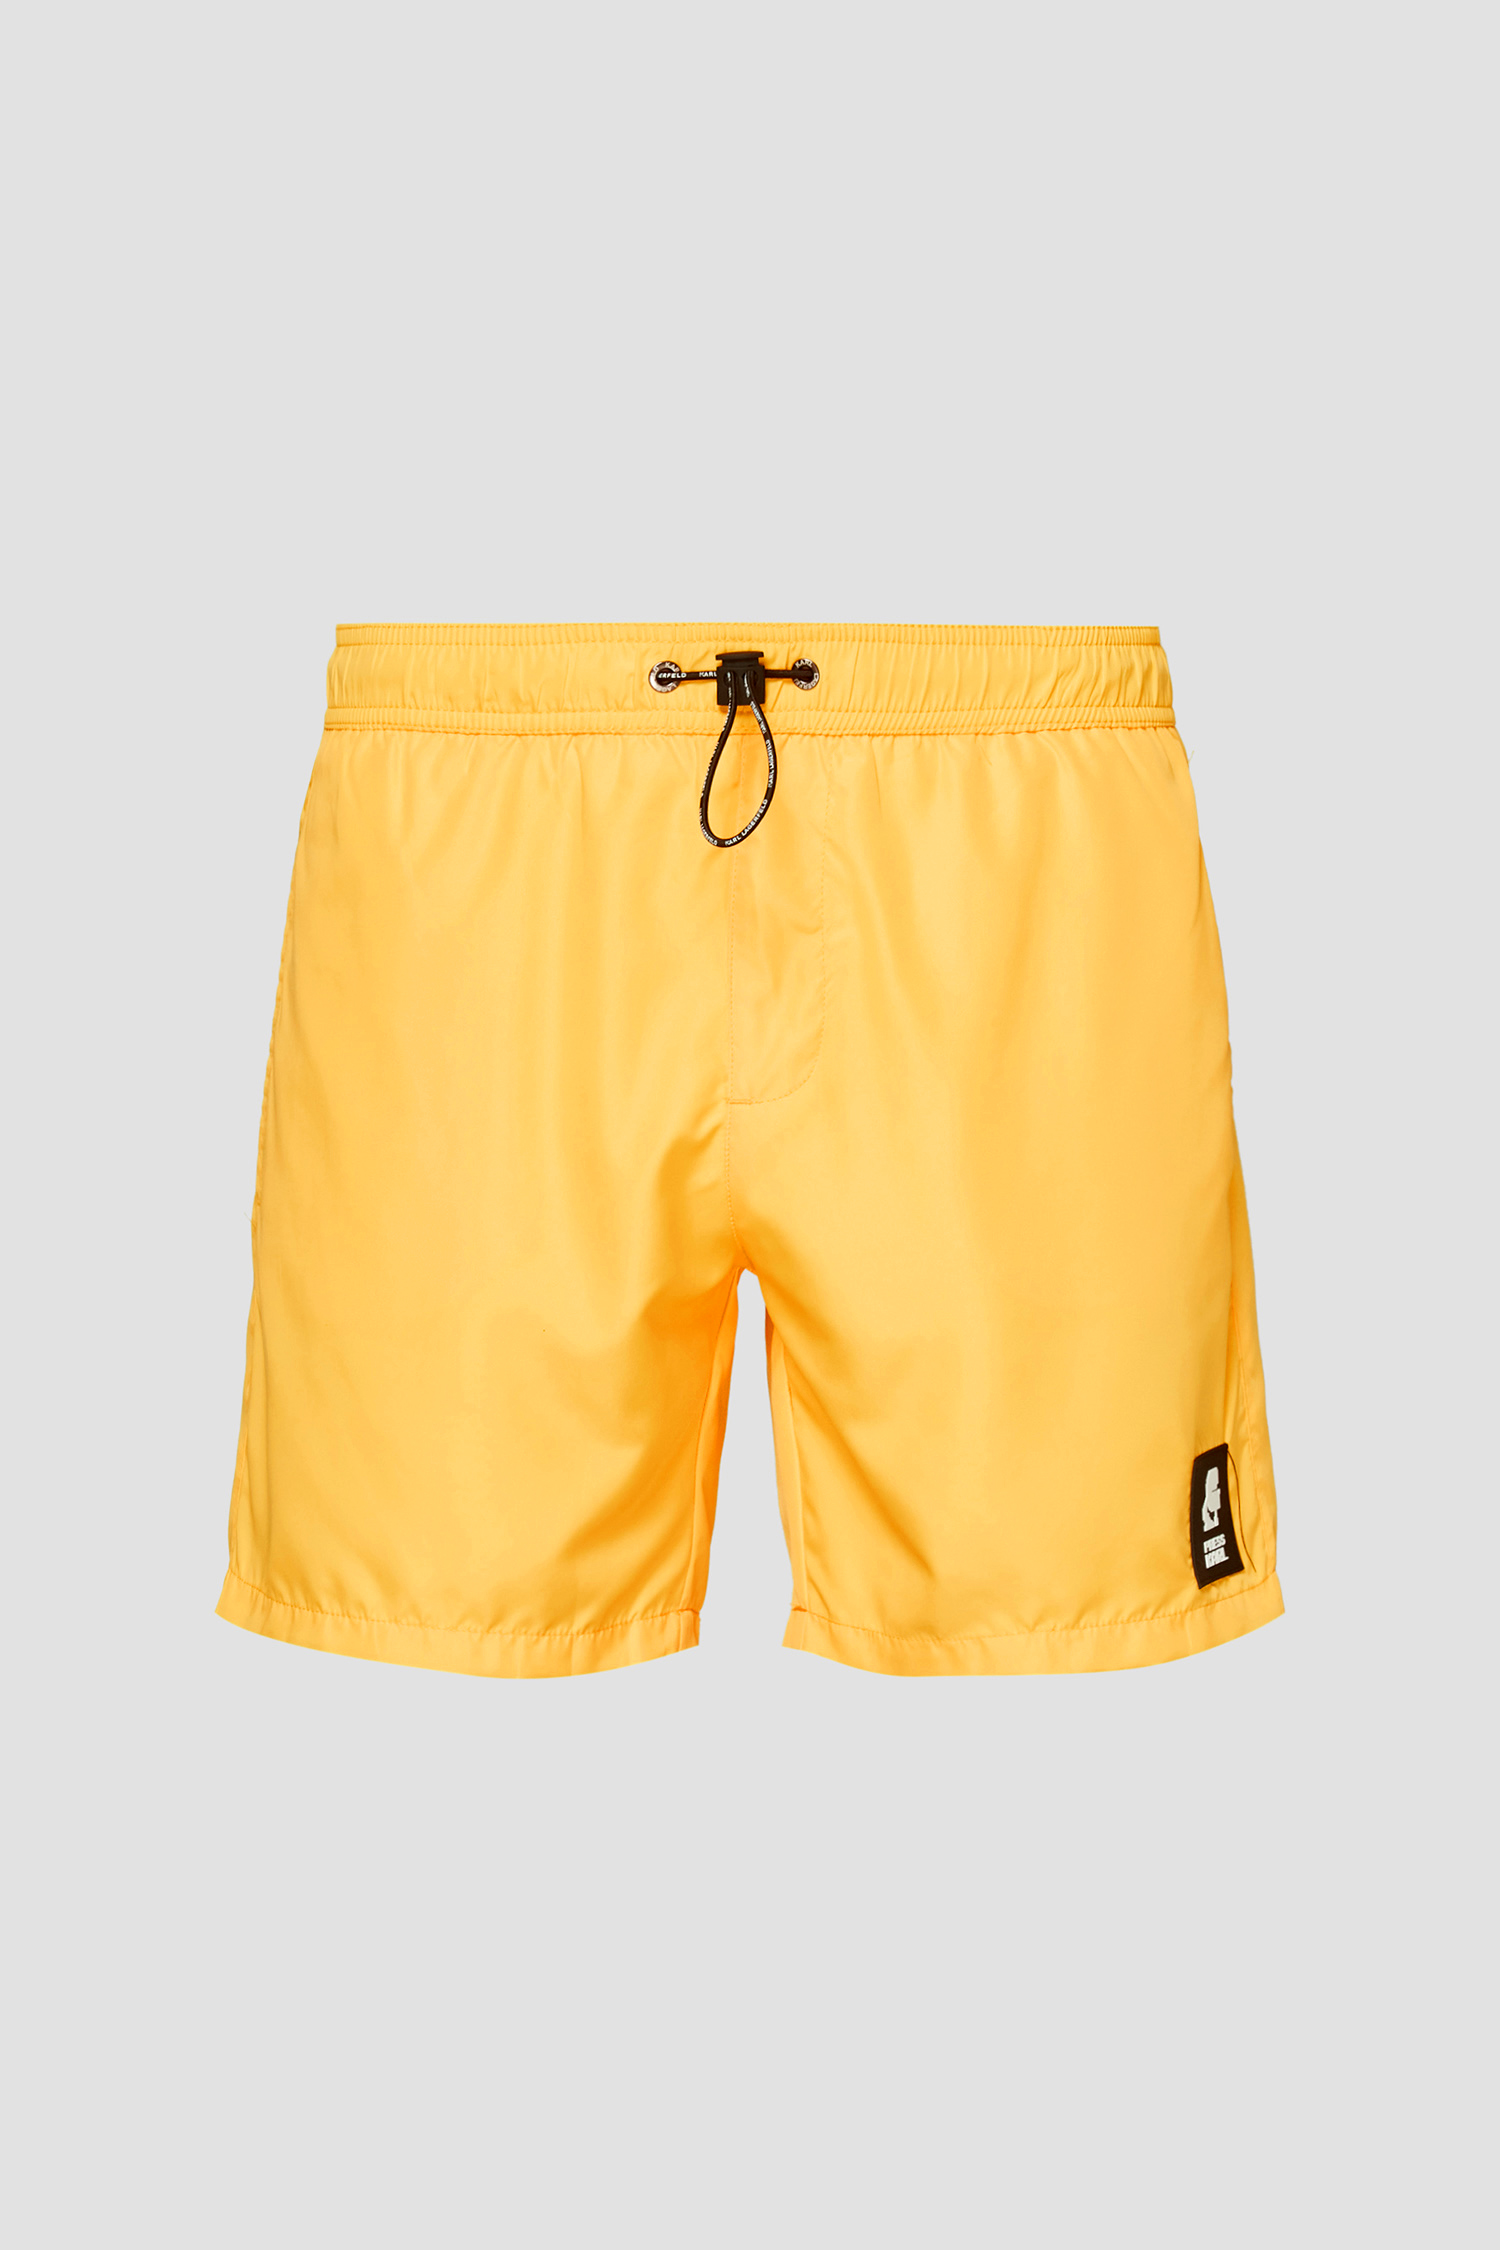 Мужские желтые плавательные шорты Karl Lagerfeld KL21MBM01;YELLOW